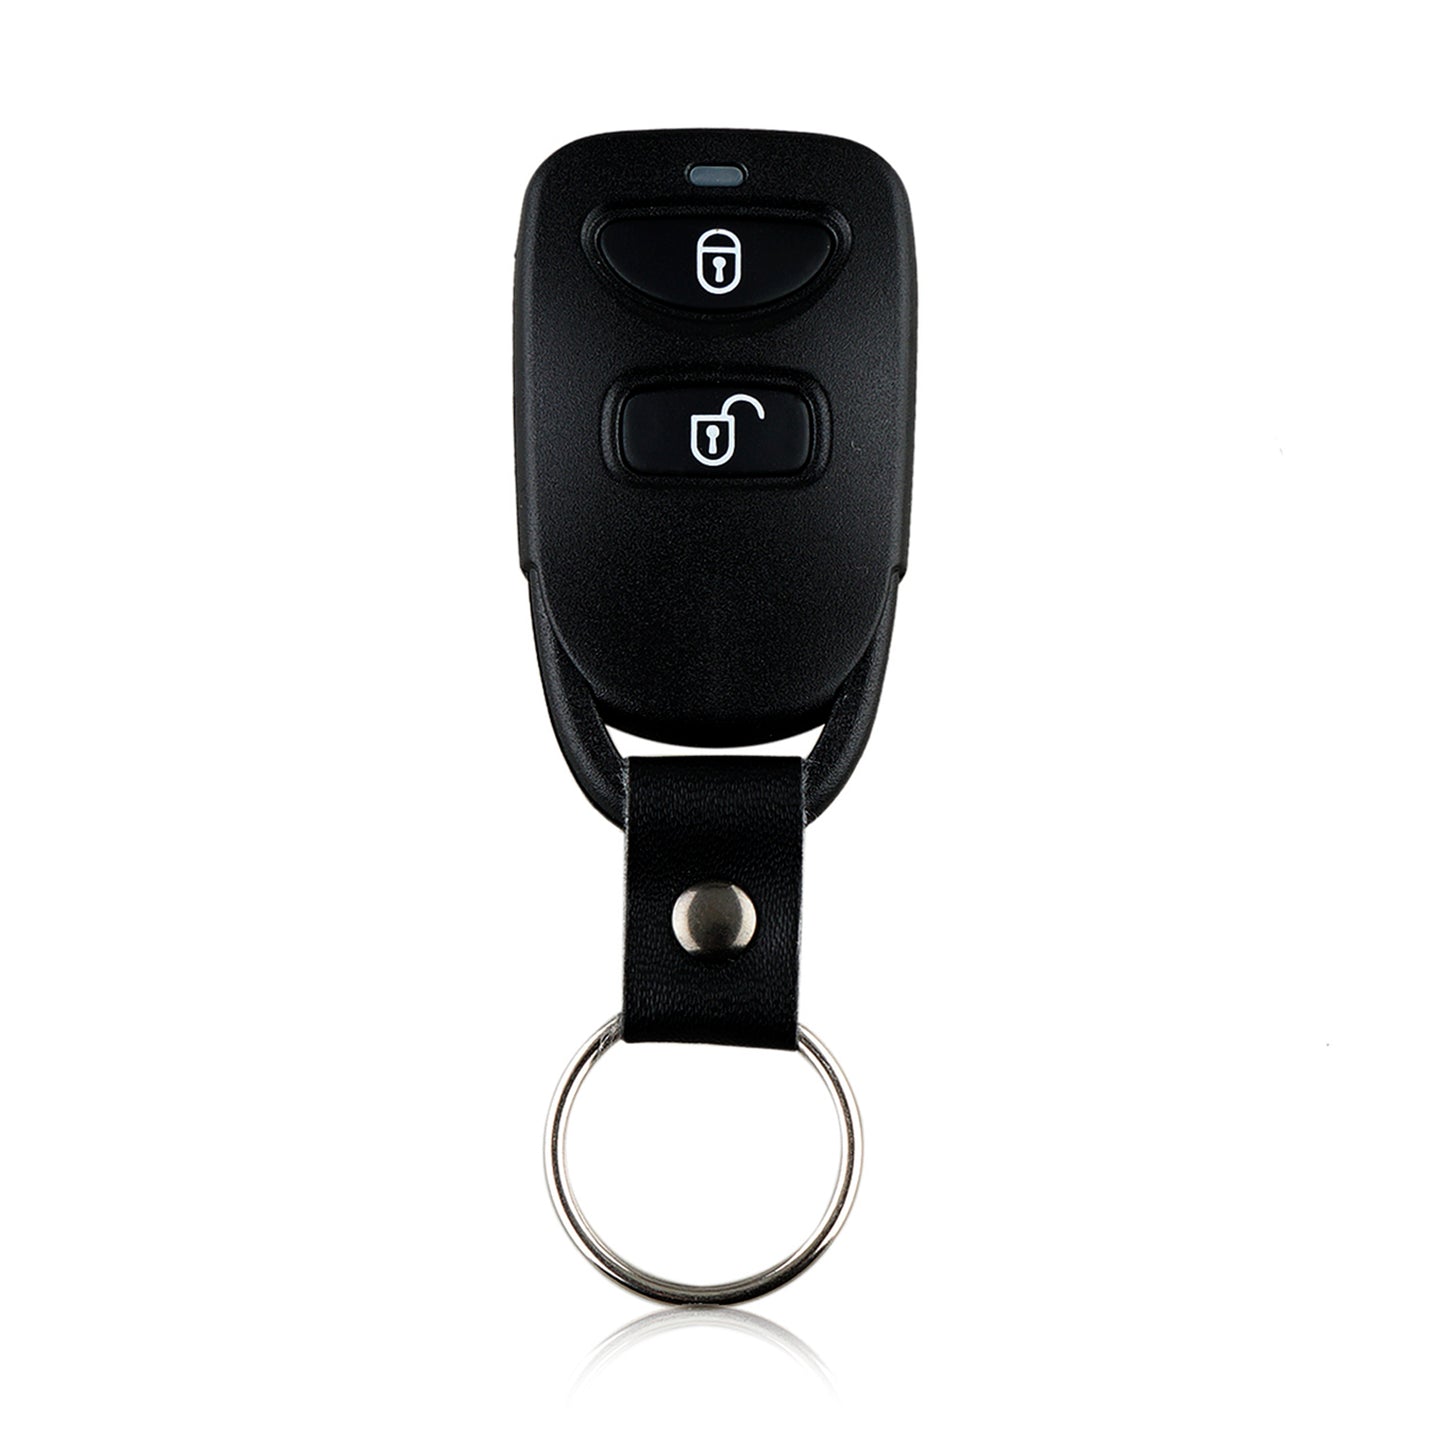 3 Buttons 315MHz Keyless Entry Fob Remote Car Key For 2006 - 2008 Hyundai Accent FCC ID: PLNHM-T002 SKU : J923